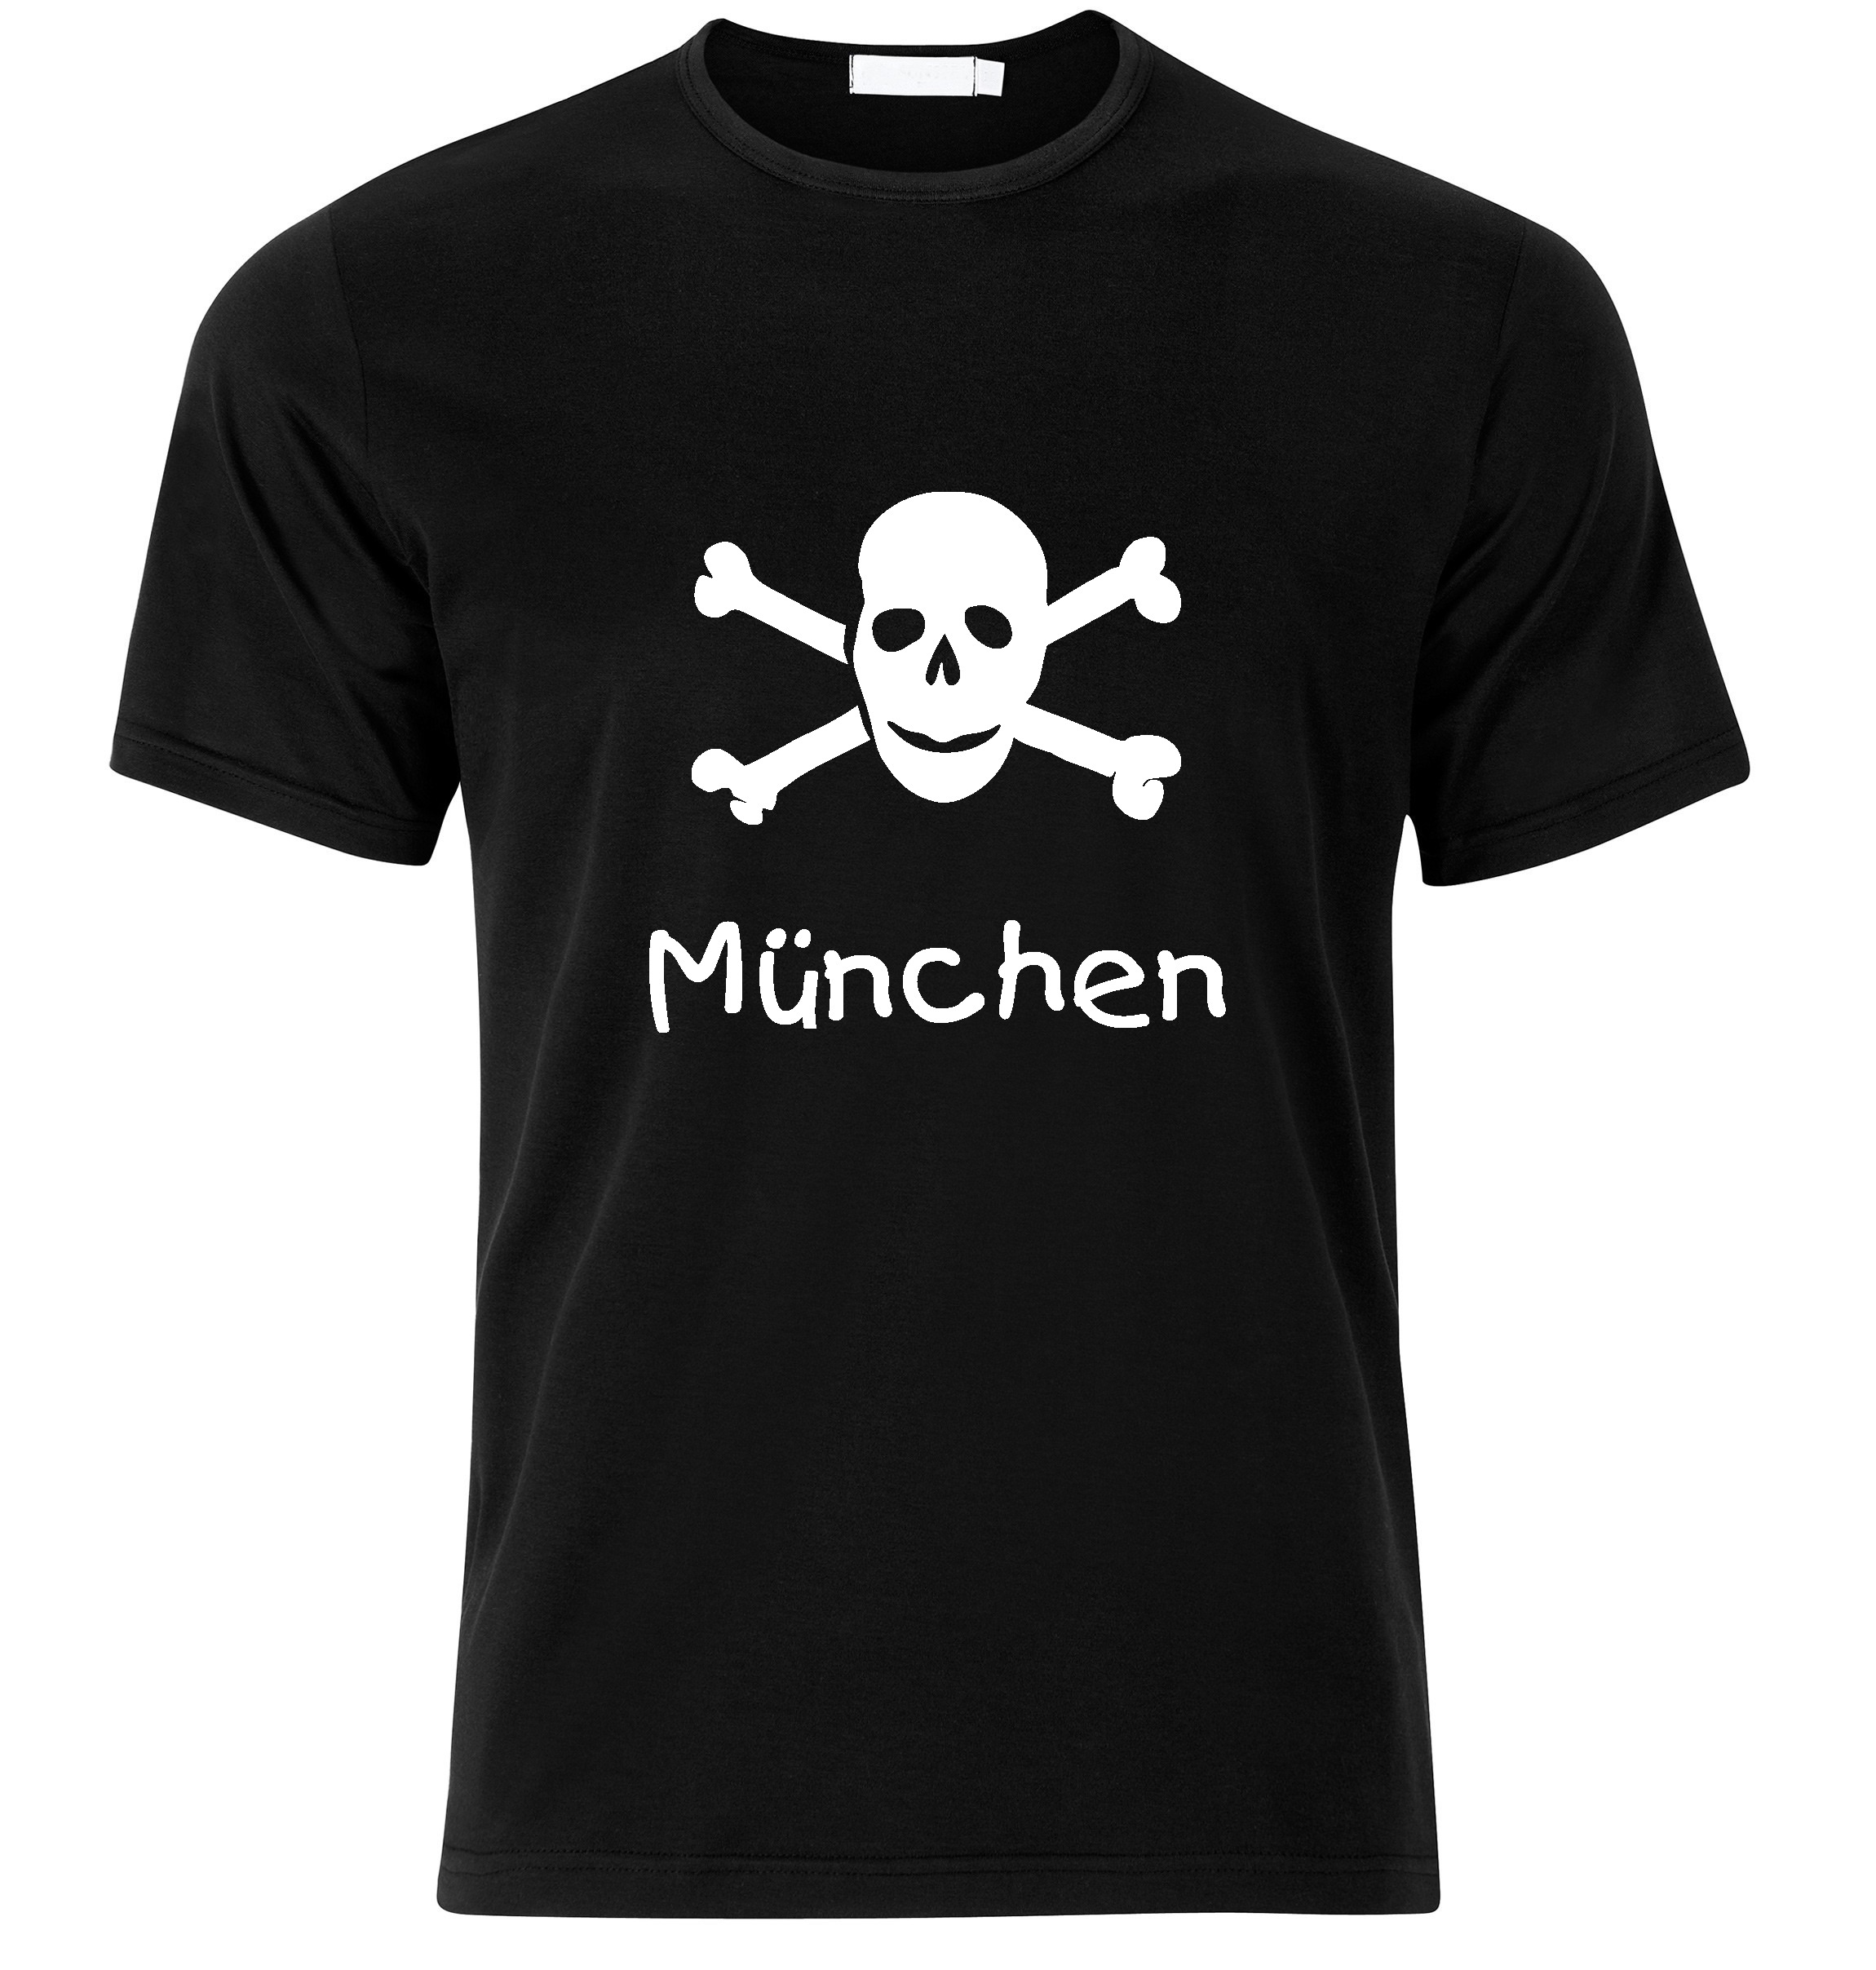 T-Shirt München Jolly Roger, Totenkopf